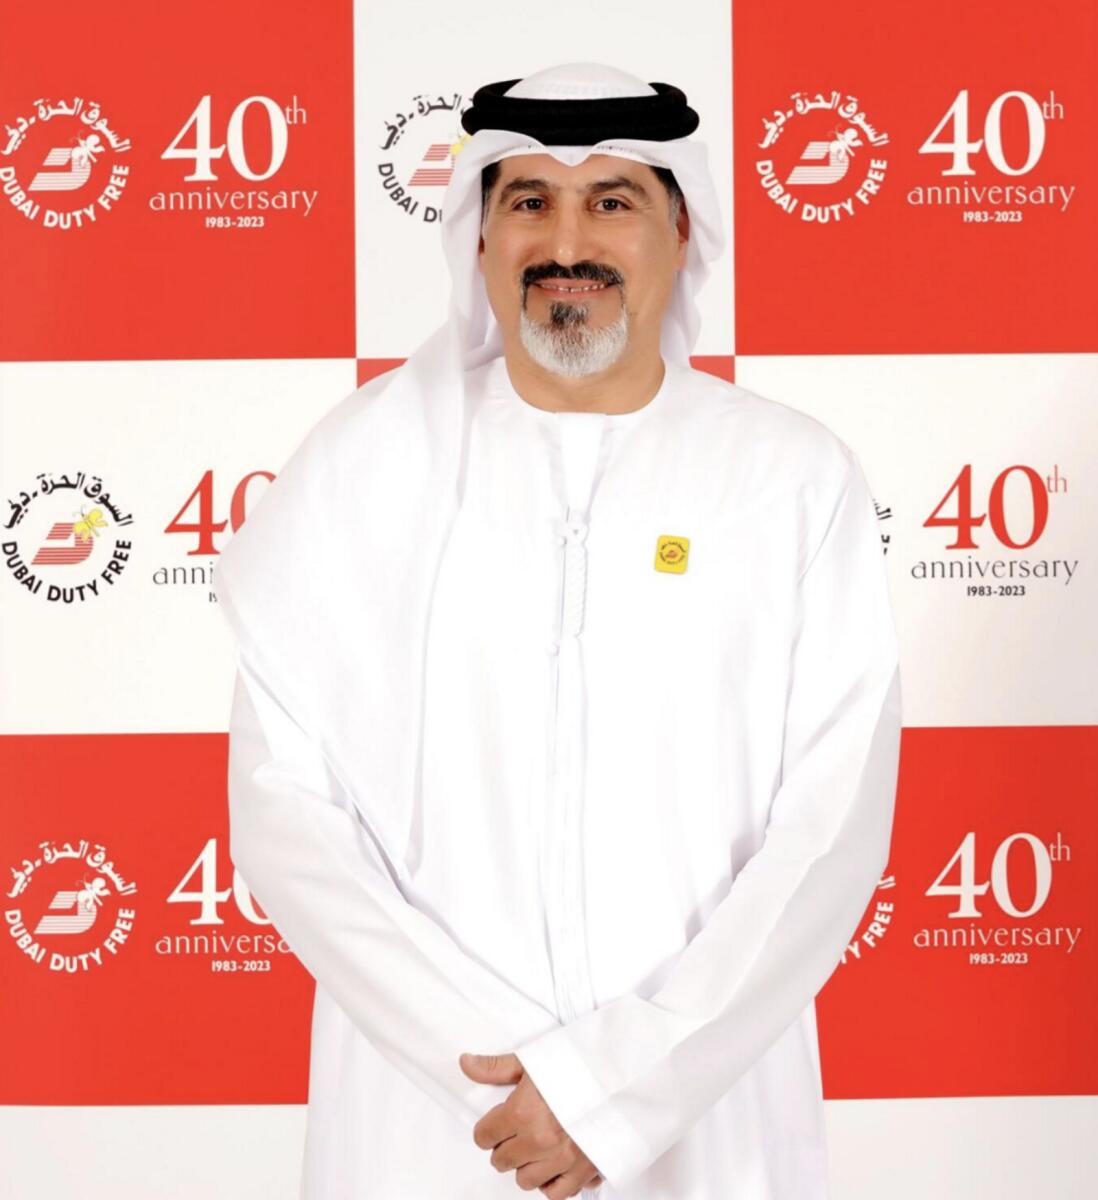 Salah Tahlak, Joint COO of Dubai Duty Free and Tournament Director of the Dubai Duty Free Tennis Championships